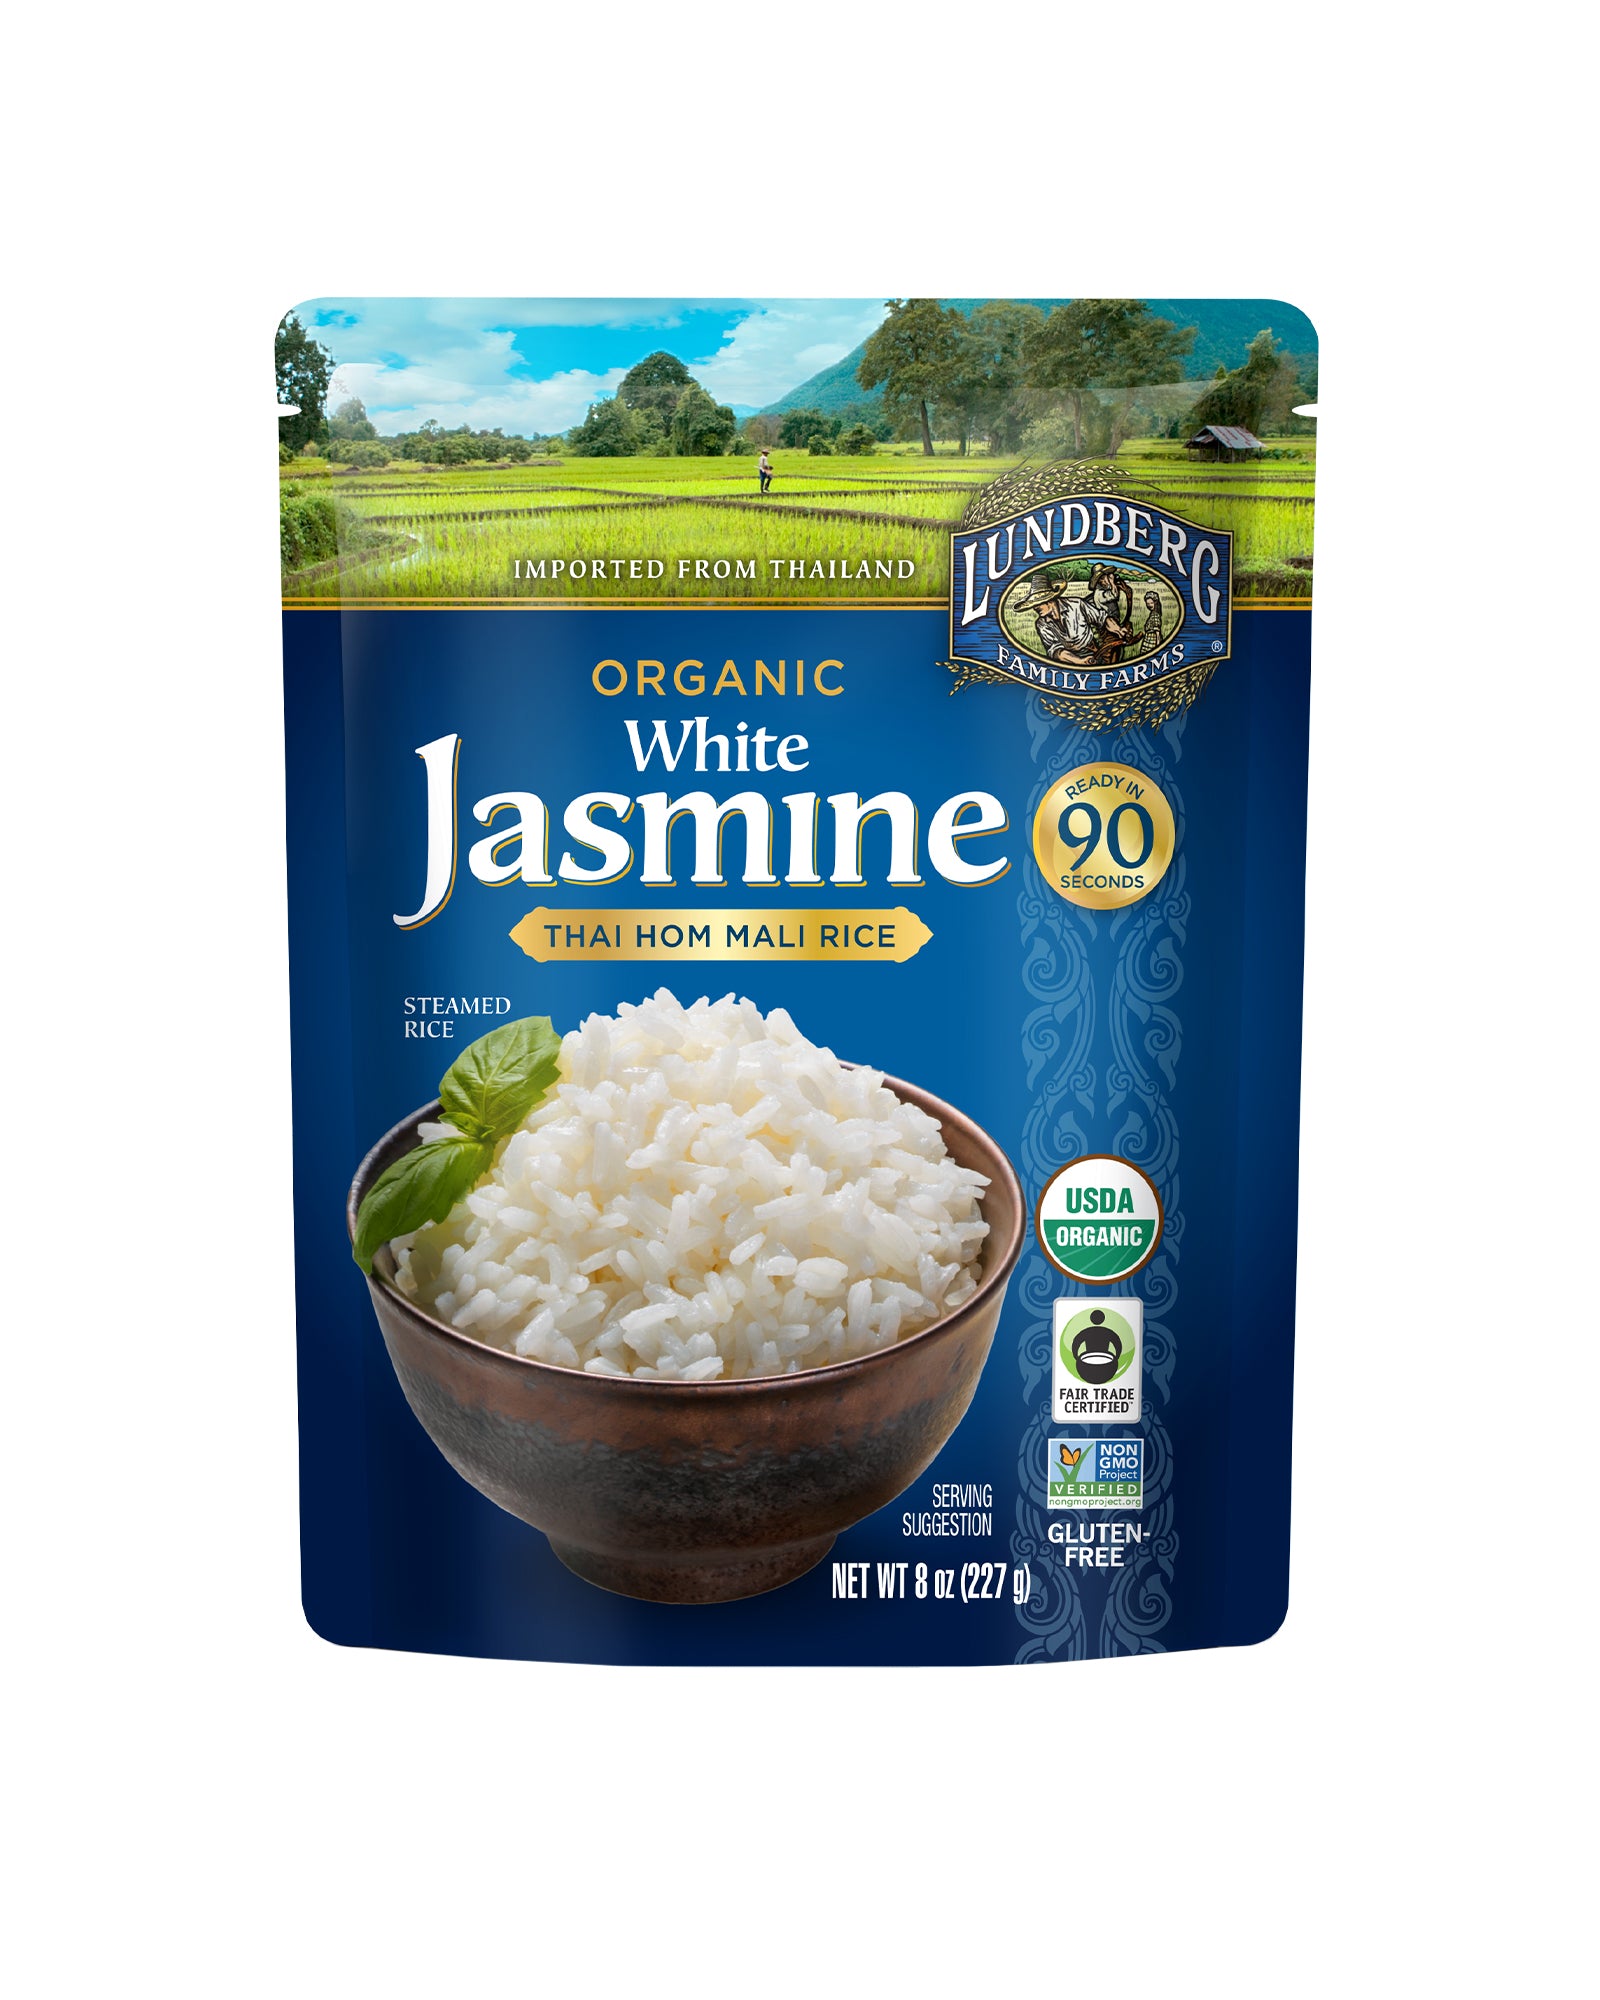 is jasmine rice ok for dogs